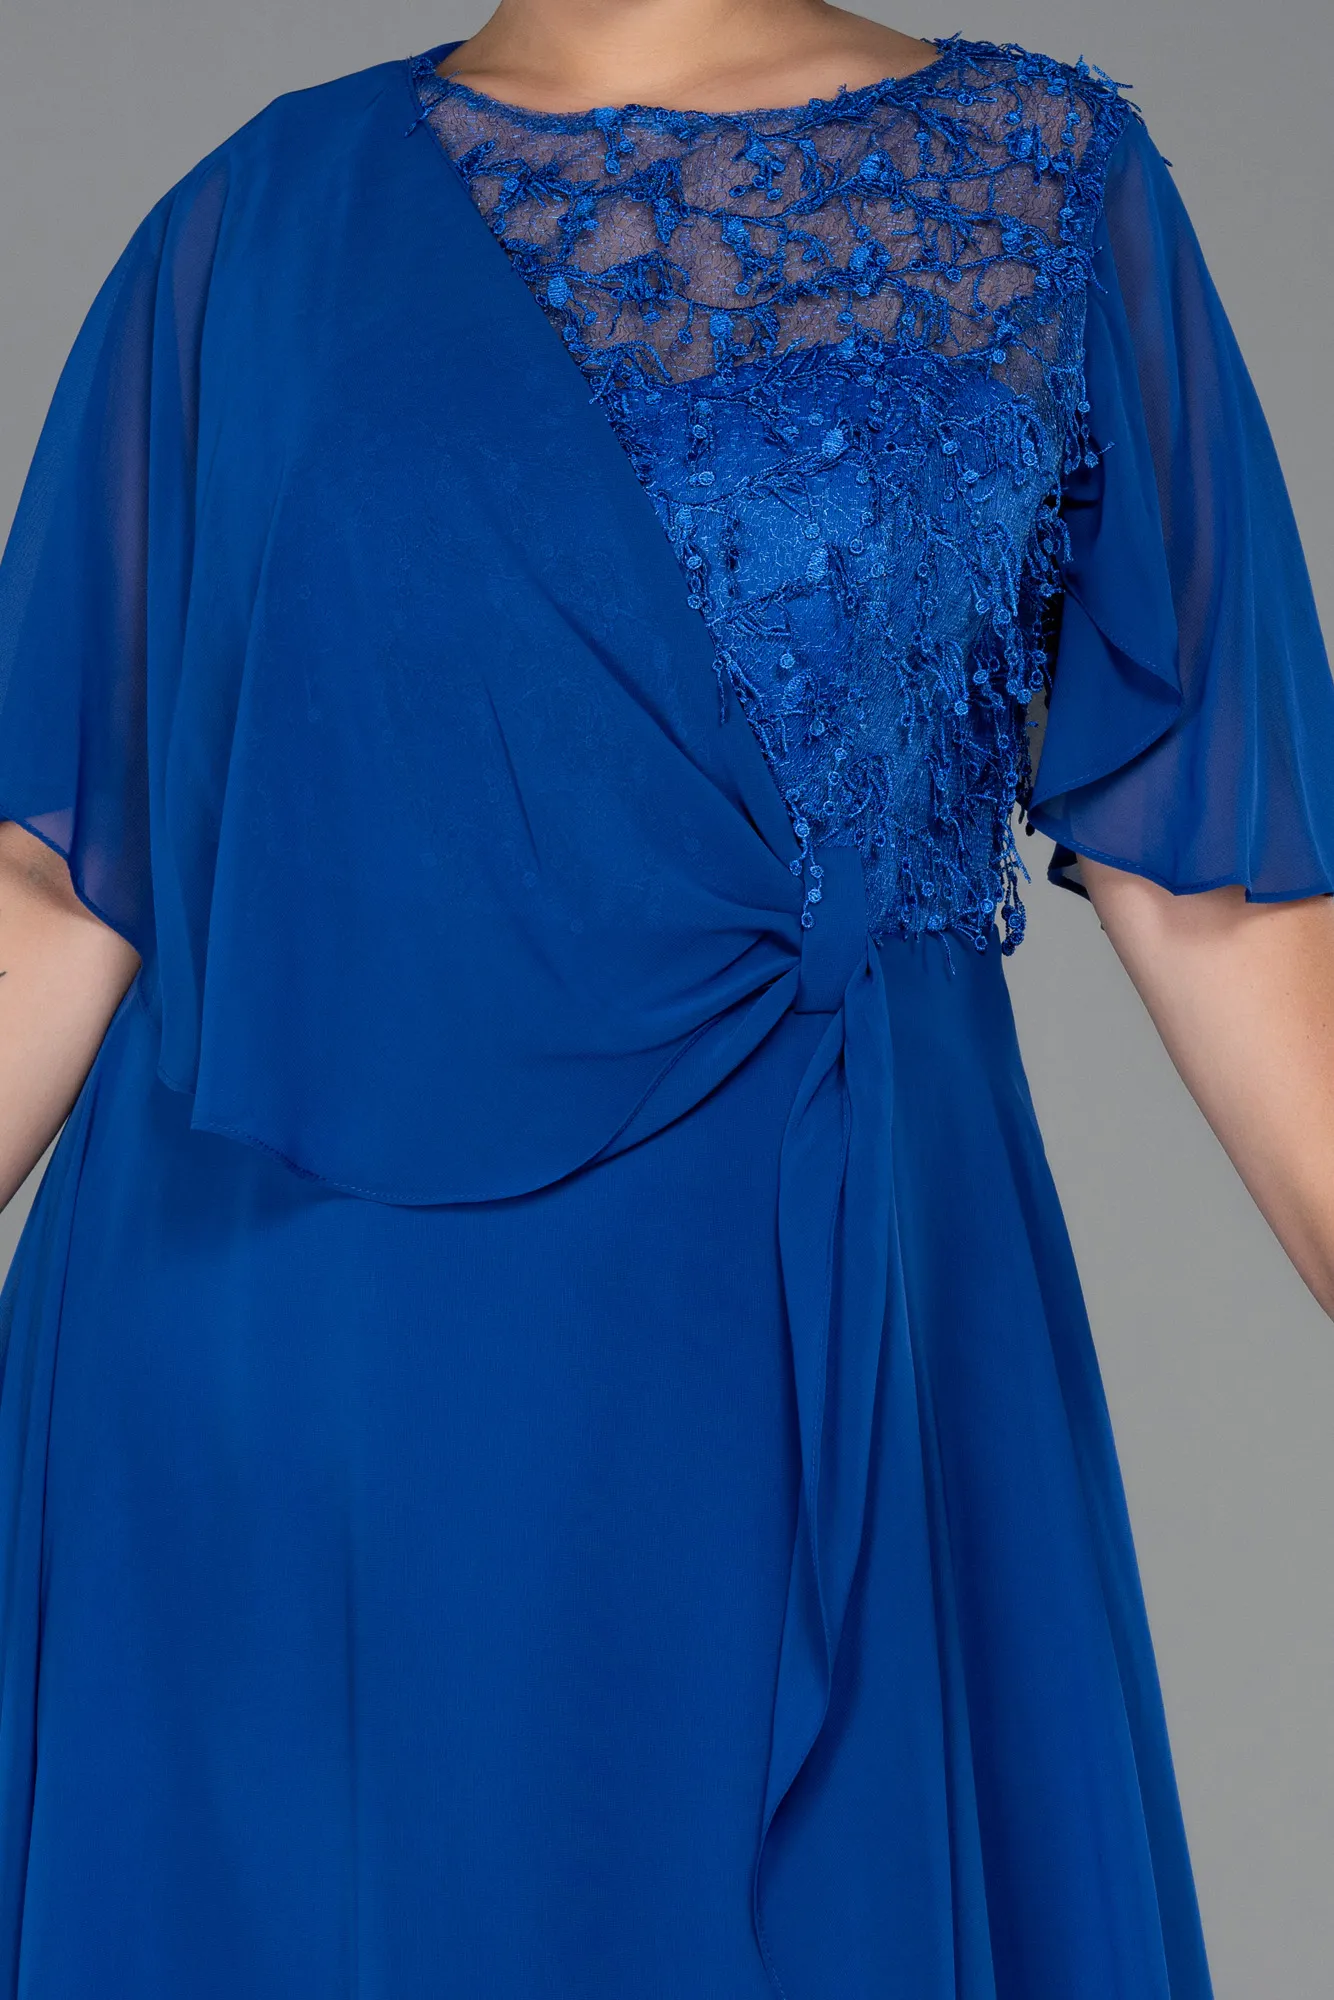 Sax Blue-Long Chiffon Plus Size Evening Dress ABU3257